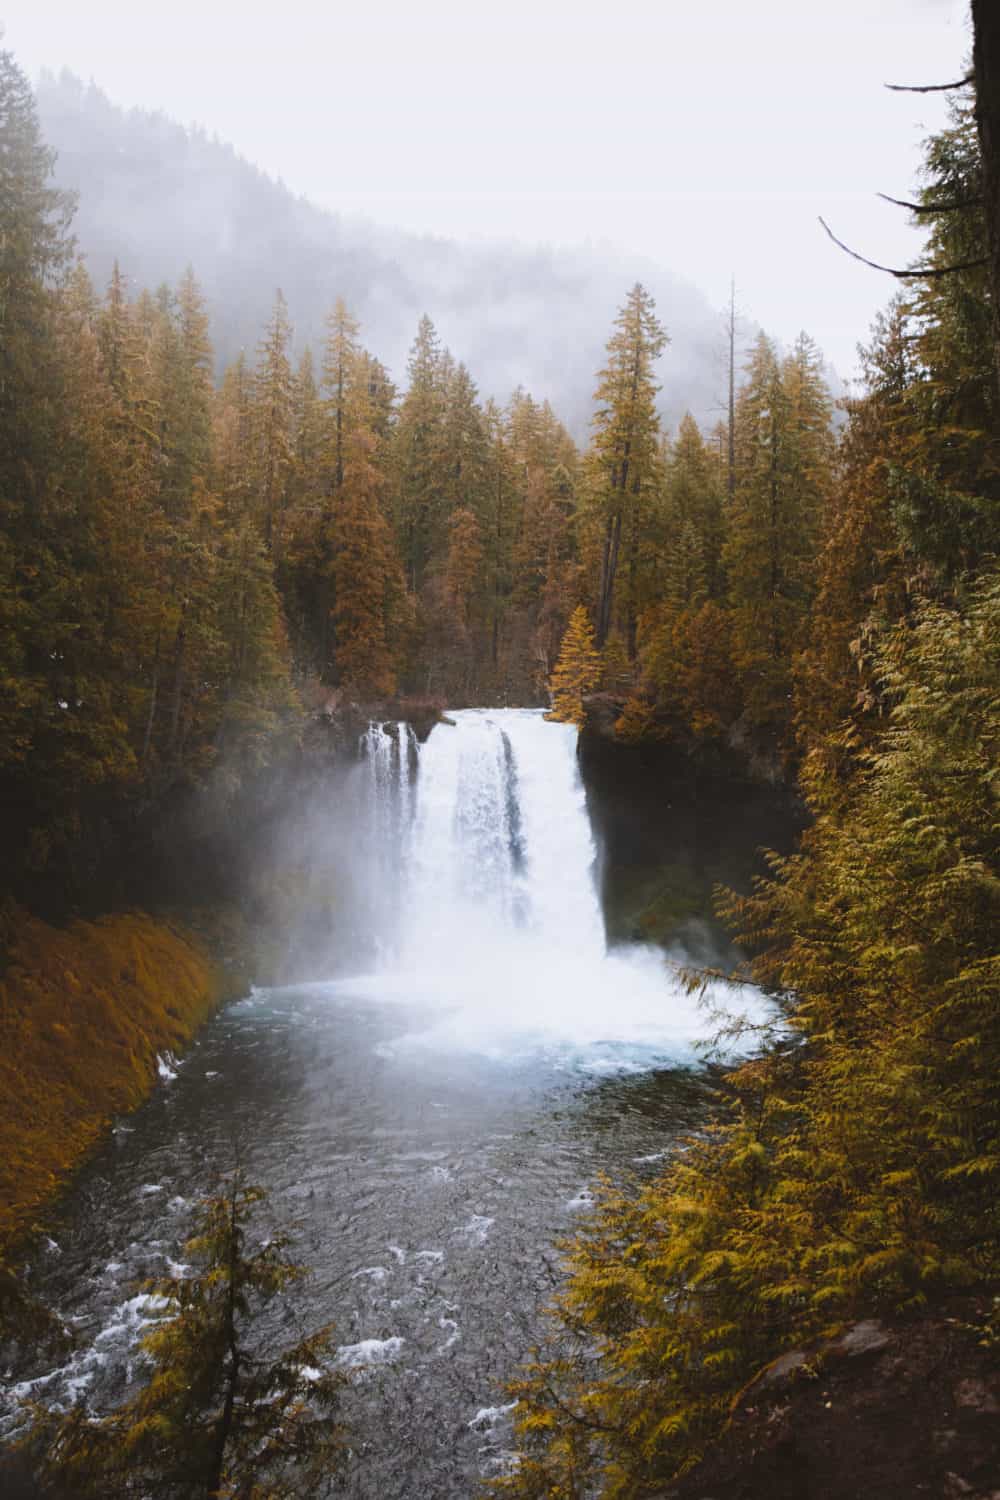 Koosah Falls, Oregon on January